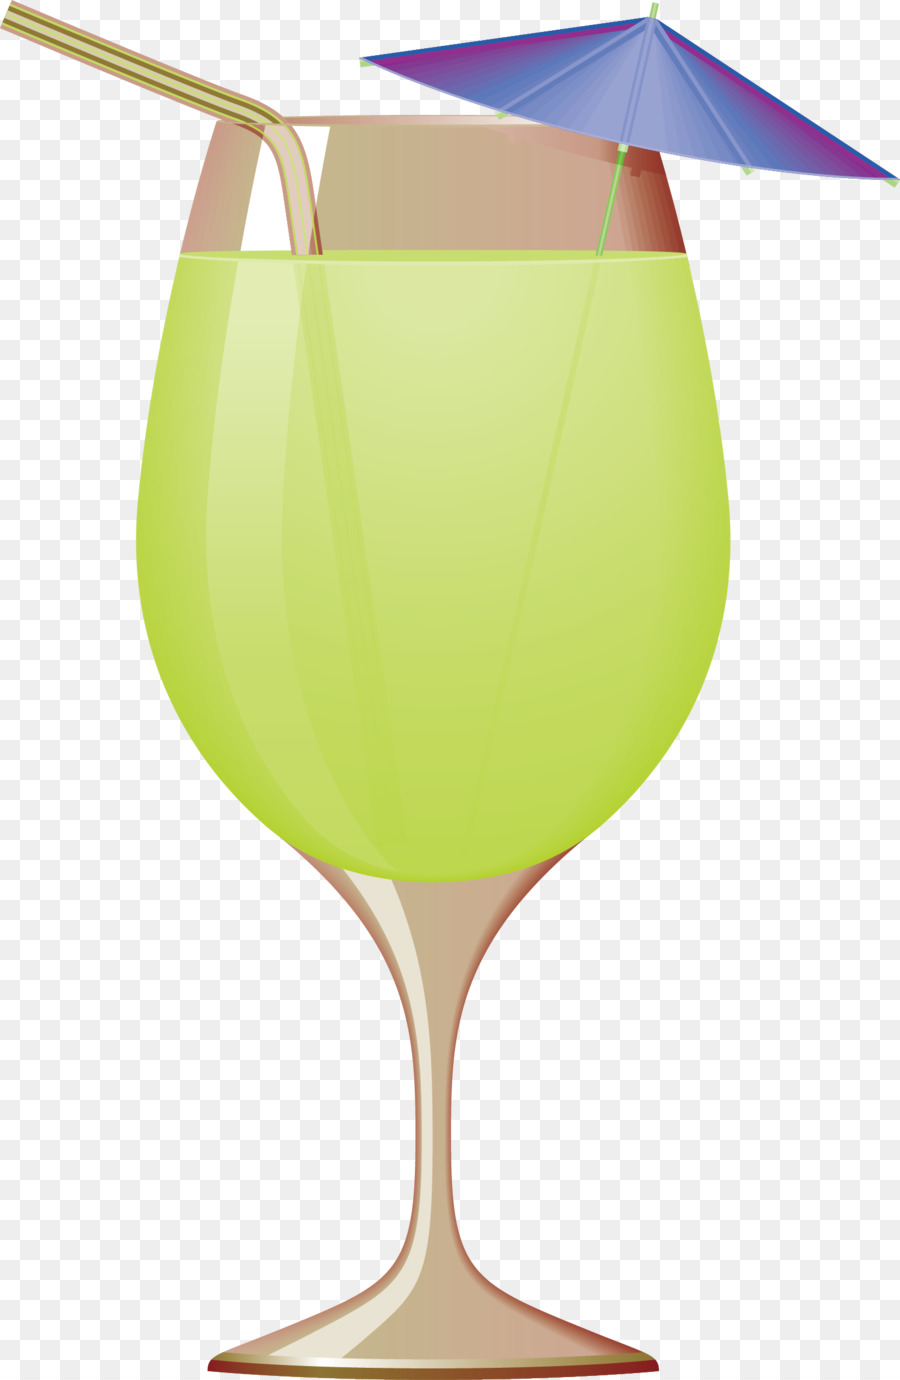 Orangensaft, Cocktail garnieren - Saft png vector element